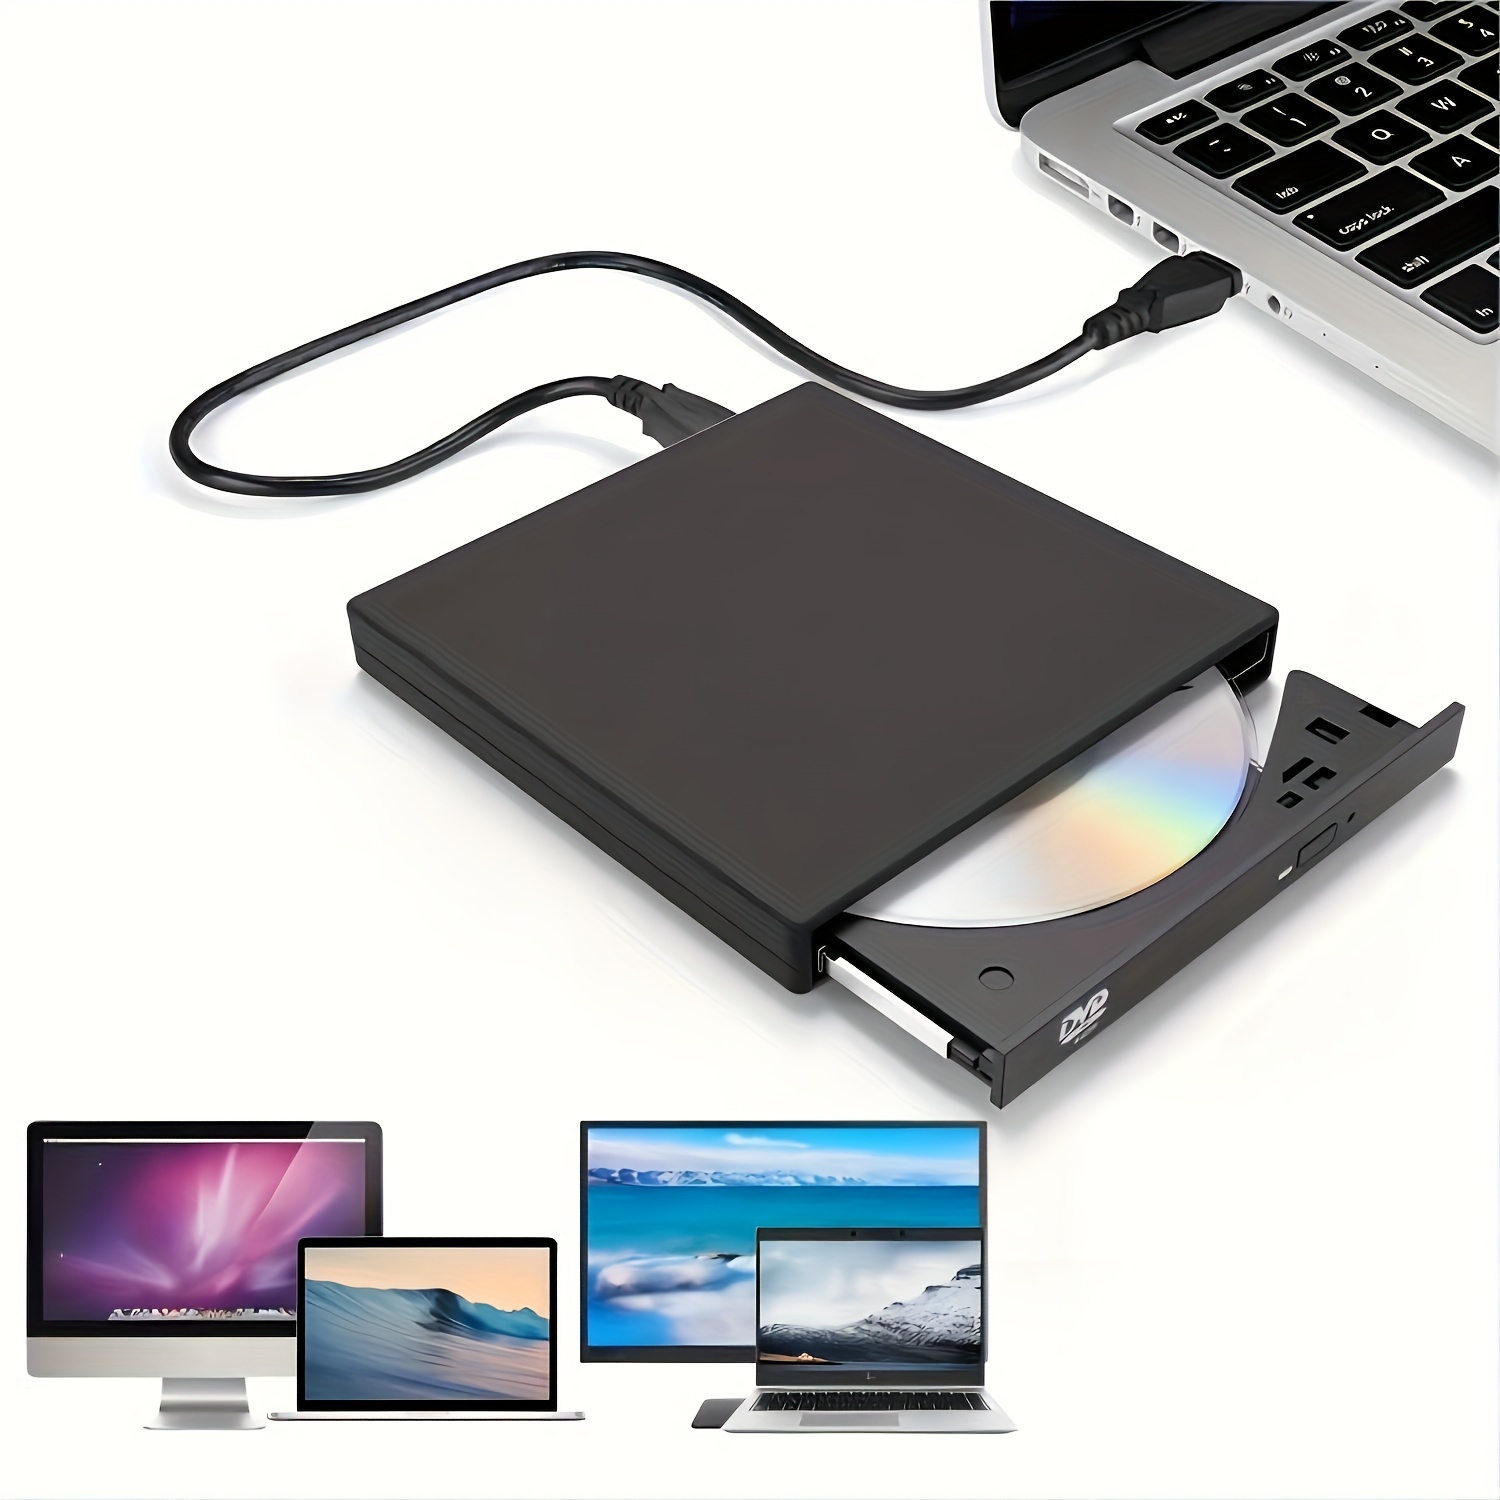 Zendure External DVD CD Drive, Ultra Slim Portable CD DVD Burner